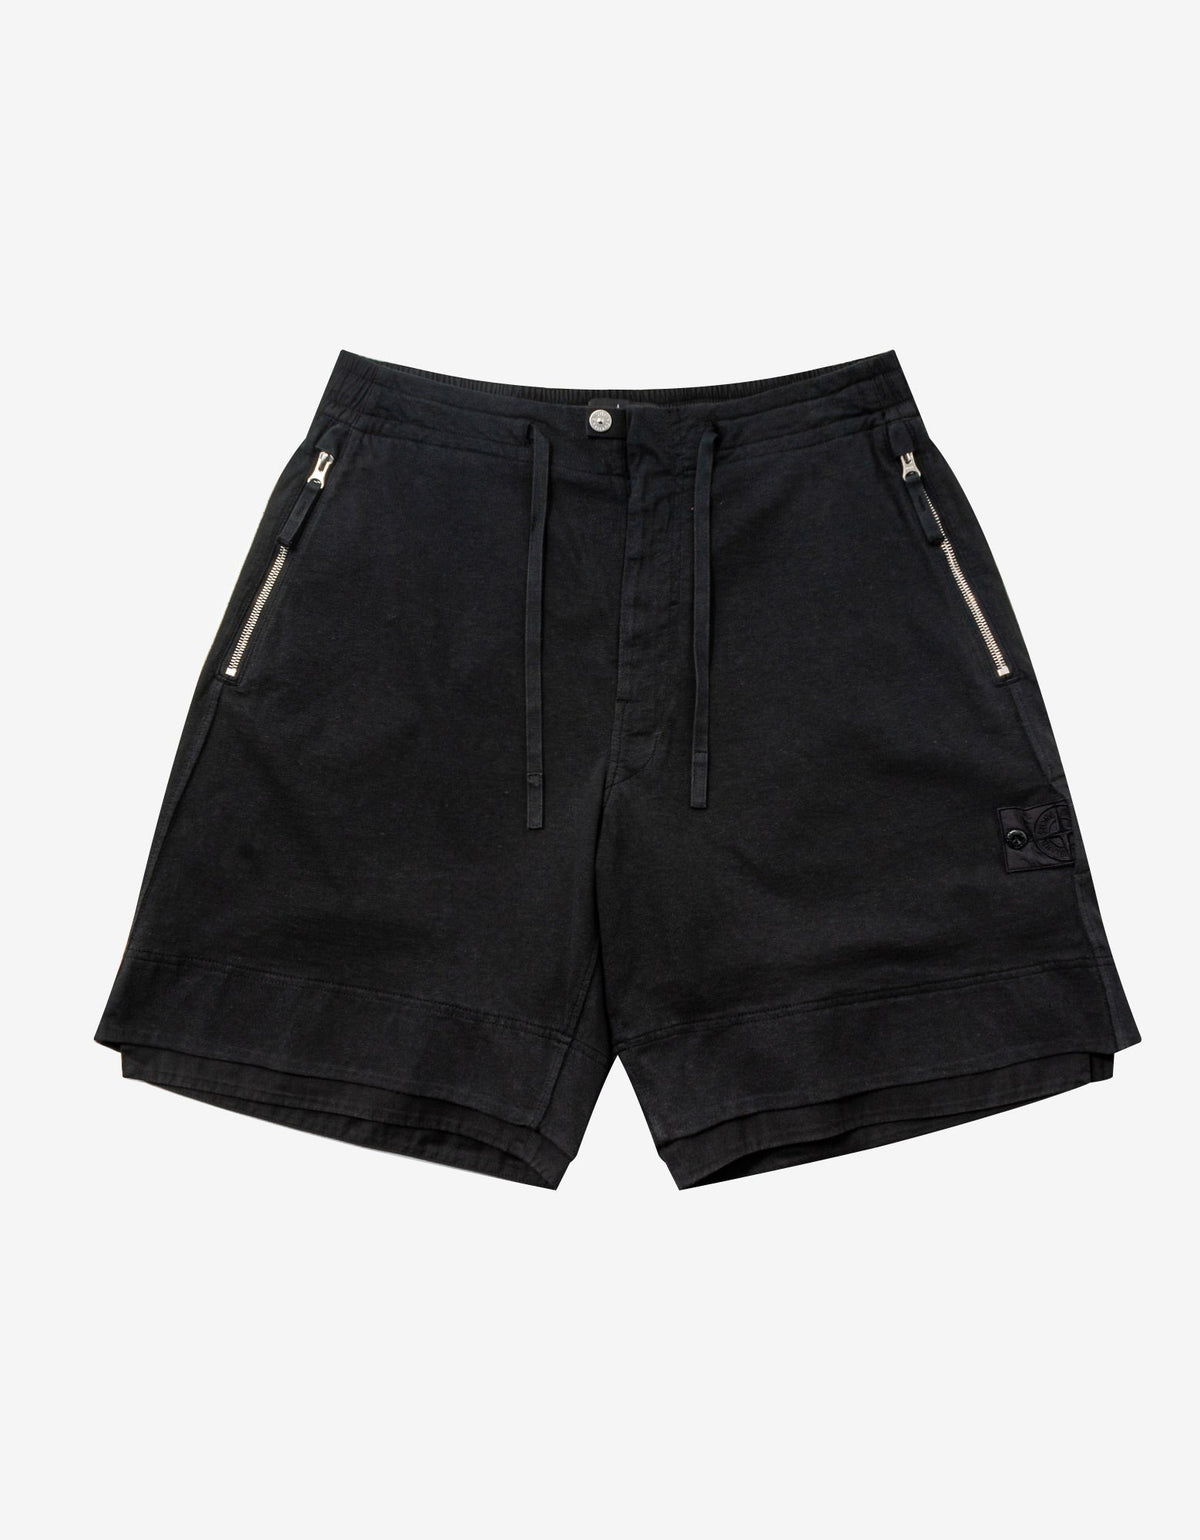 Stone Island Shadow Project Black Cotton Shorts